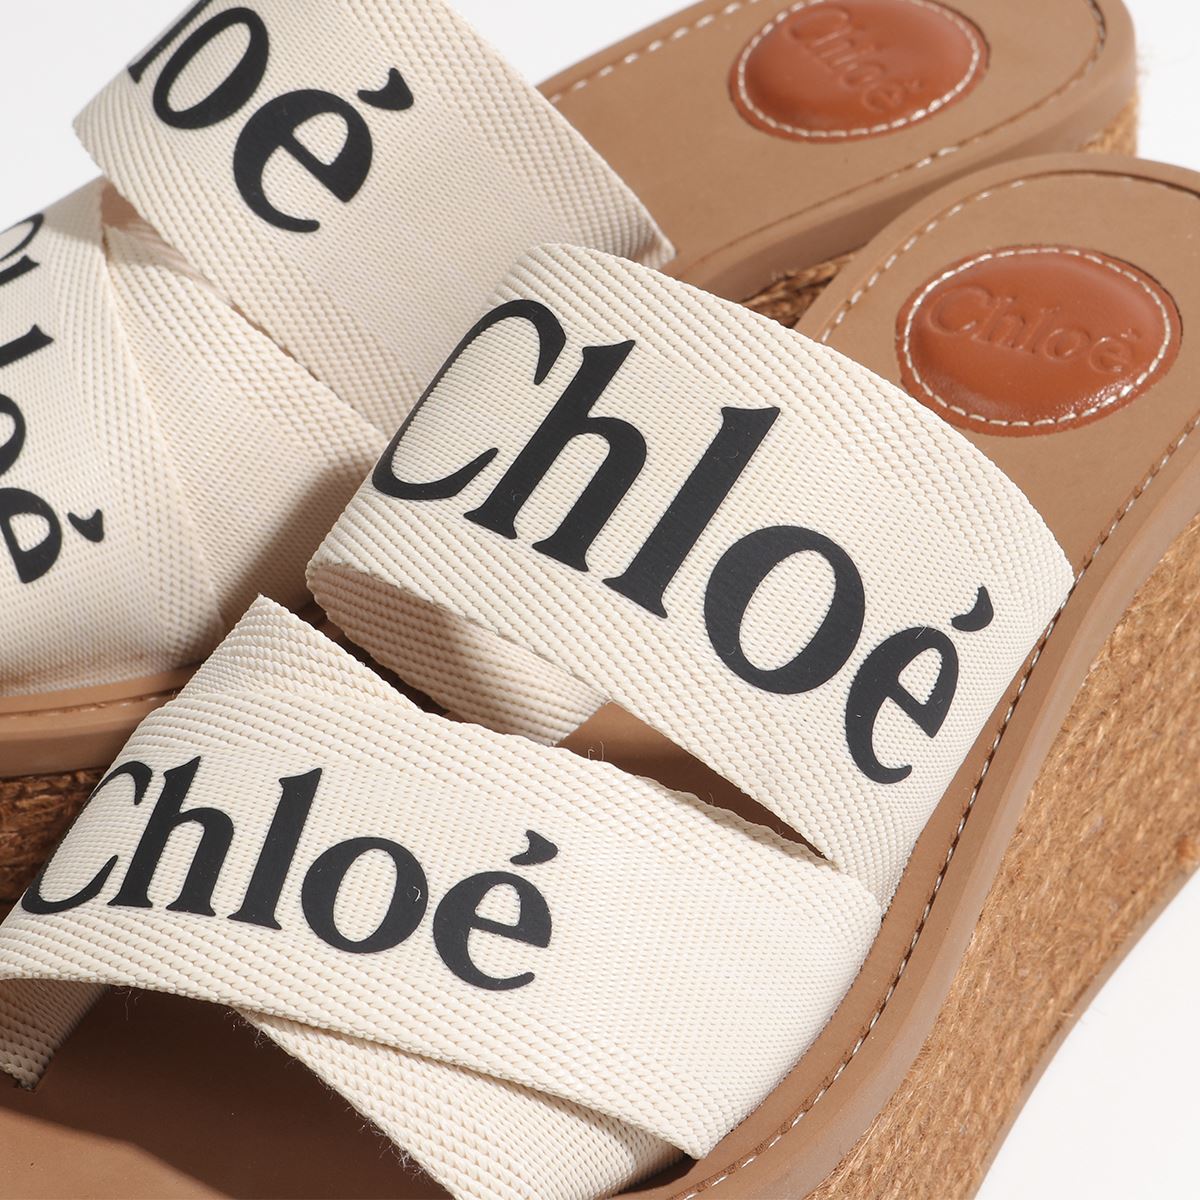 Chloe クロエ CHC21U44908 WOODY ウッディ ウェッジミュール サンダル 厚底 ロゴバンド プラットフォーム エスパドリーユ  ジュート 靴 101/White レディース | インポートセレクト musee